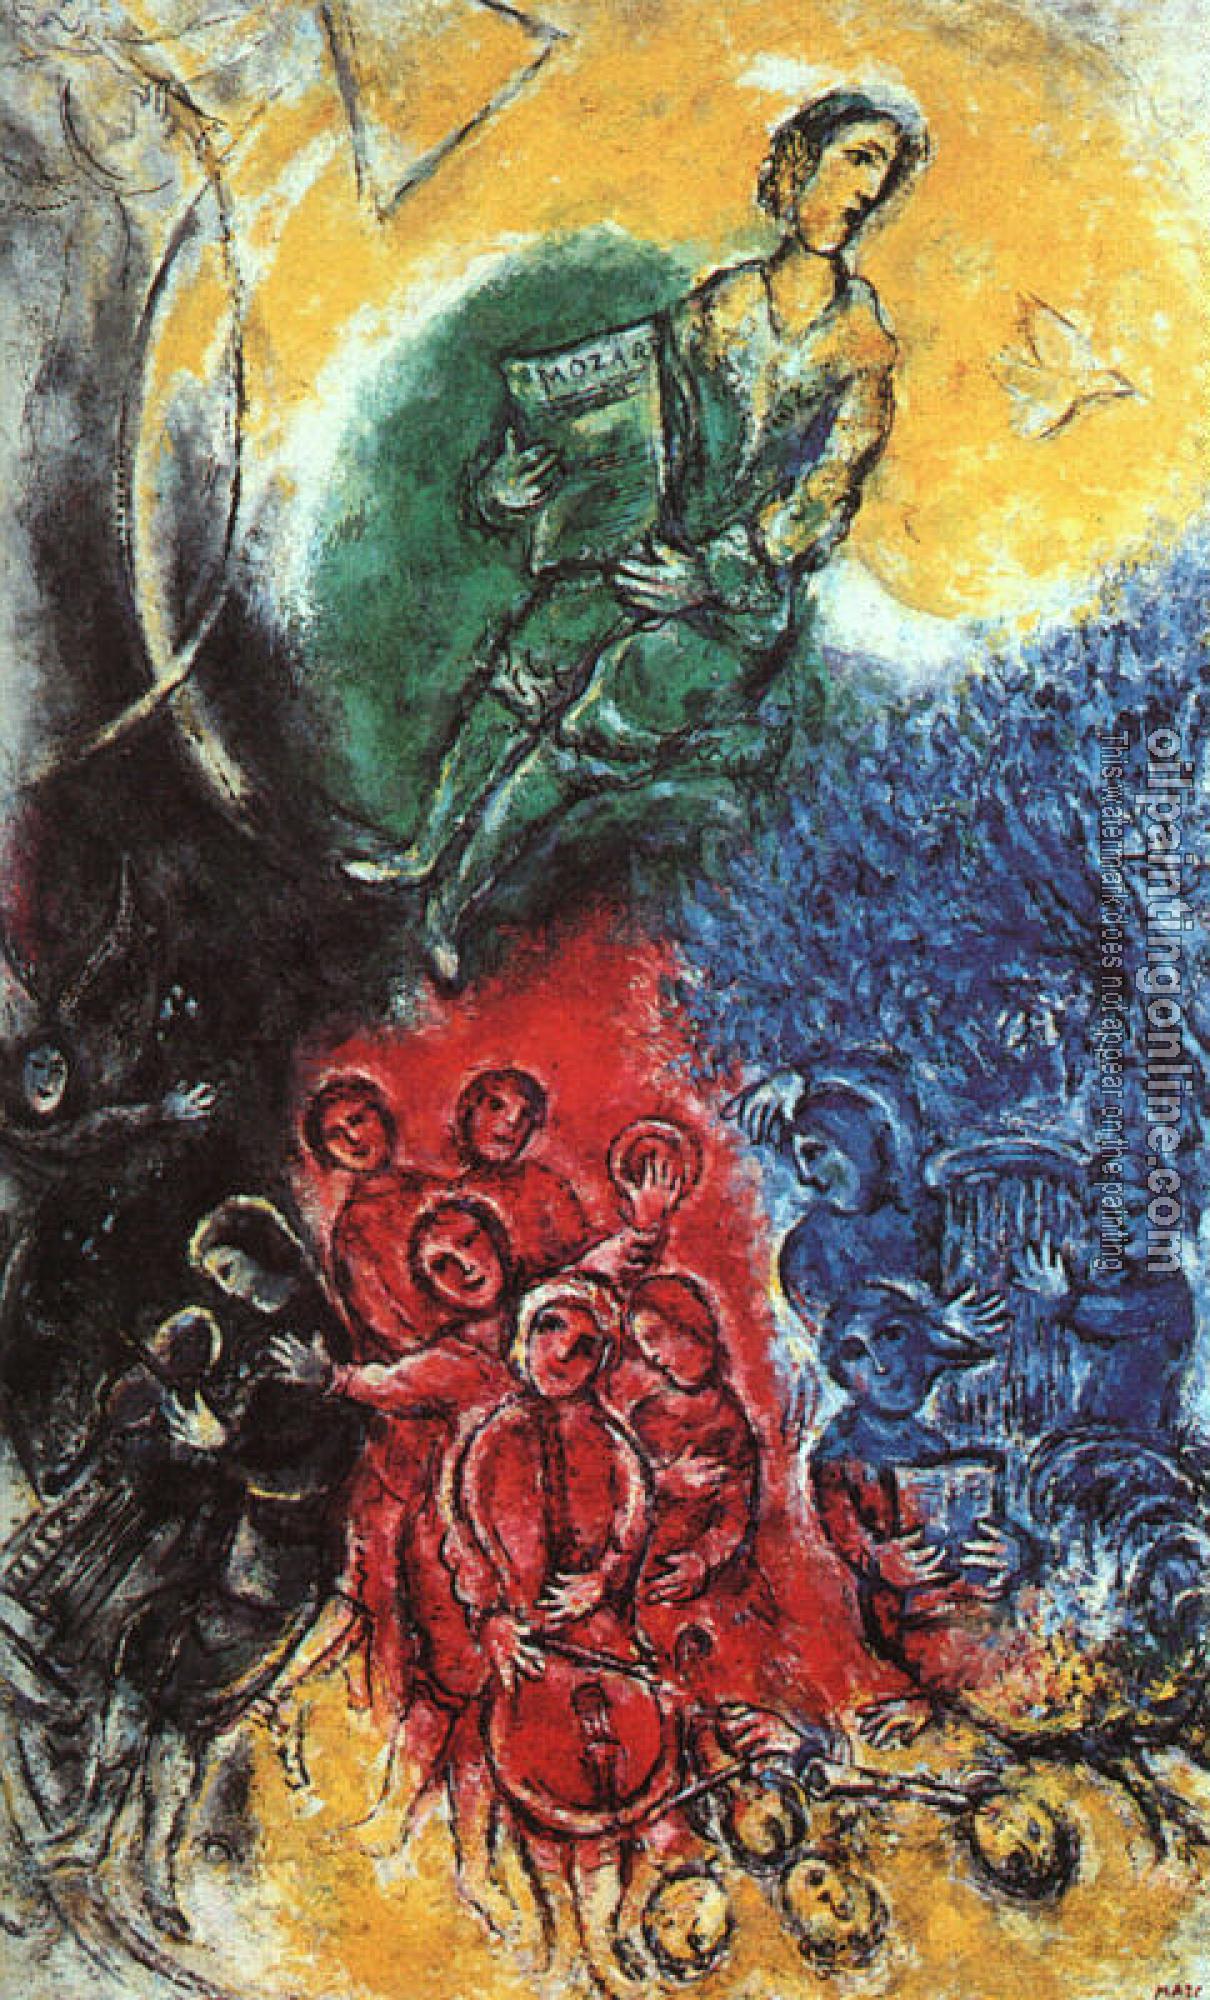 Chagall, Marc - Music